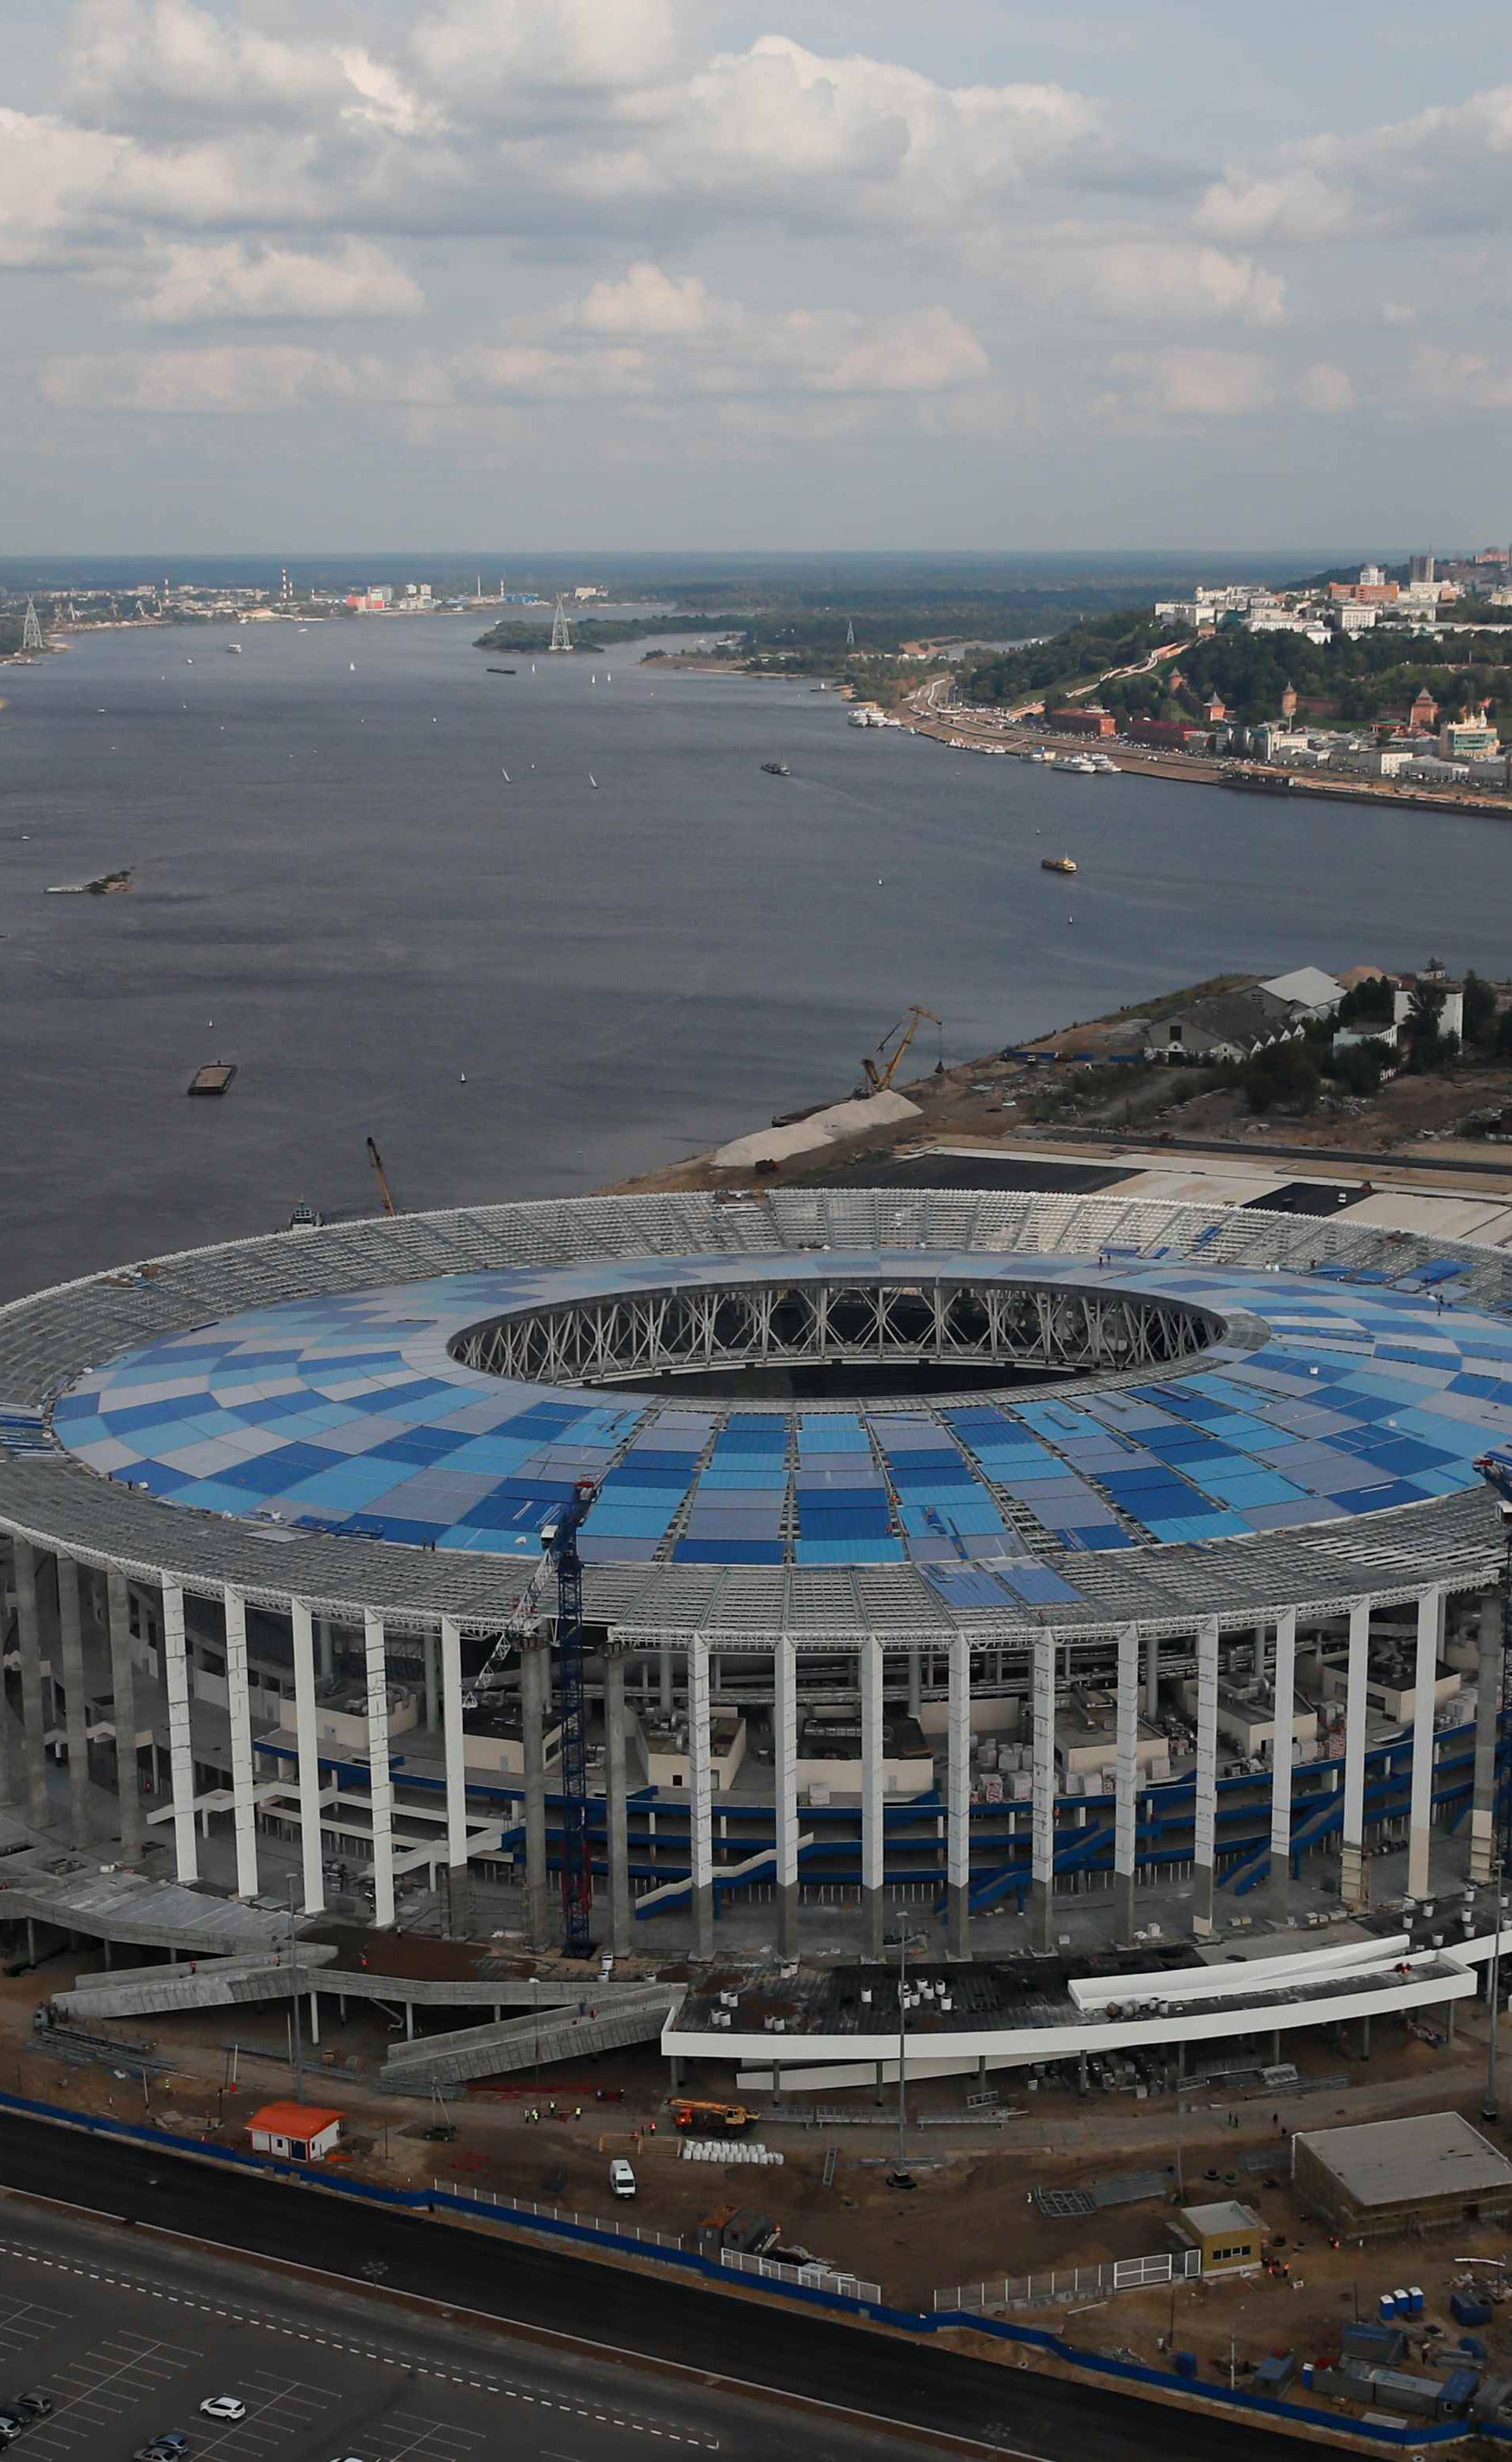 FILE PHOTO: An aerial view shows Nizhny Novgorod stadium under construction and the confluence of Volga and Oka rivers in Nizhny Novgorod